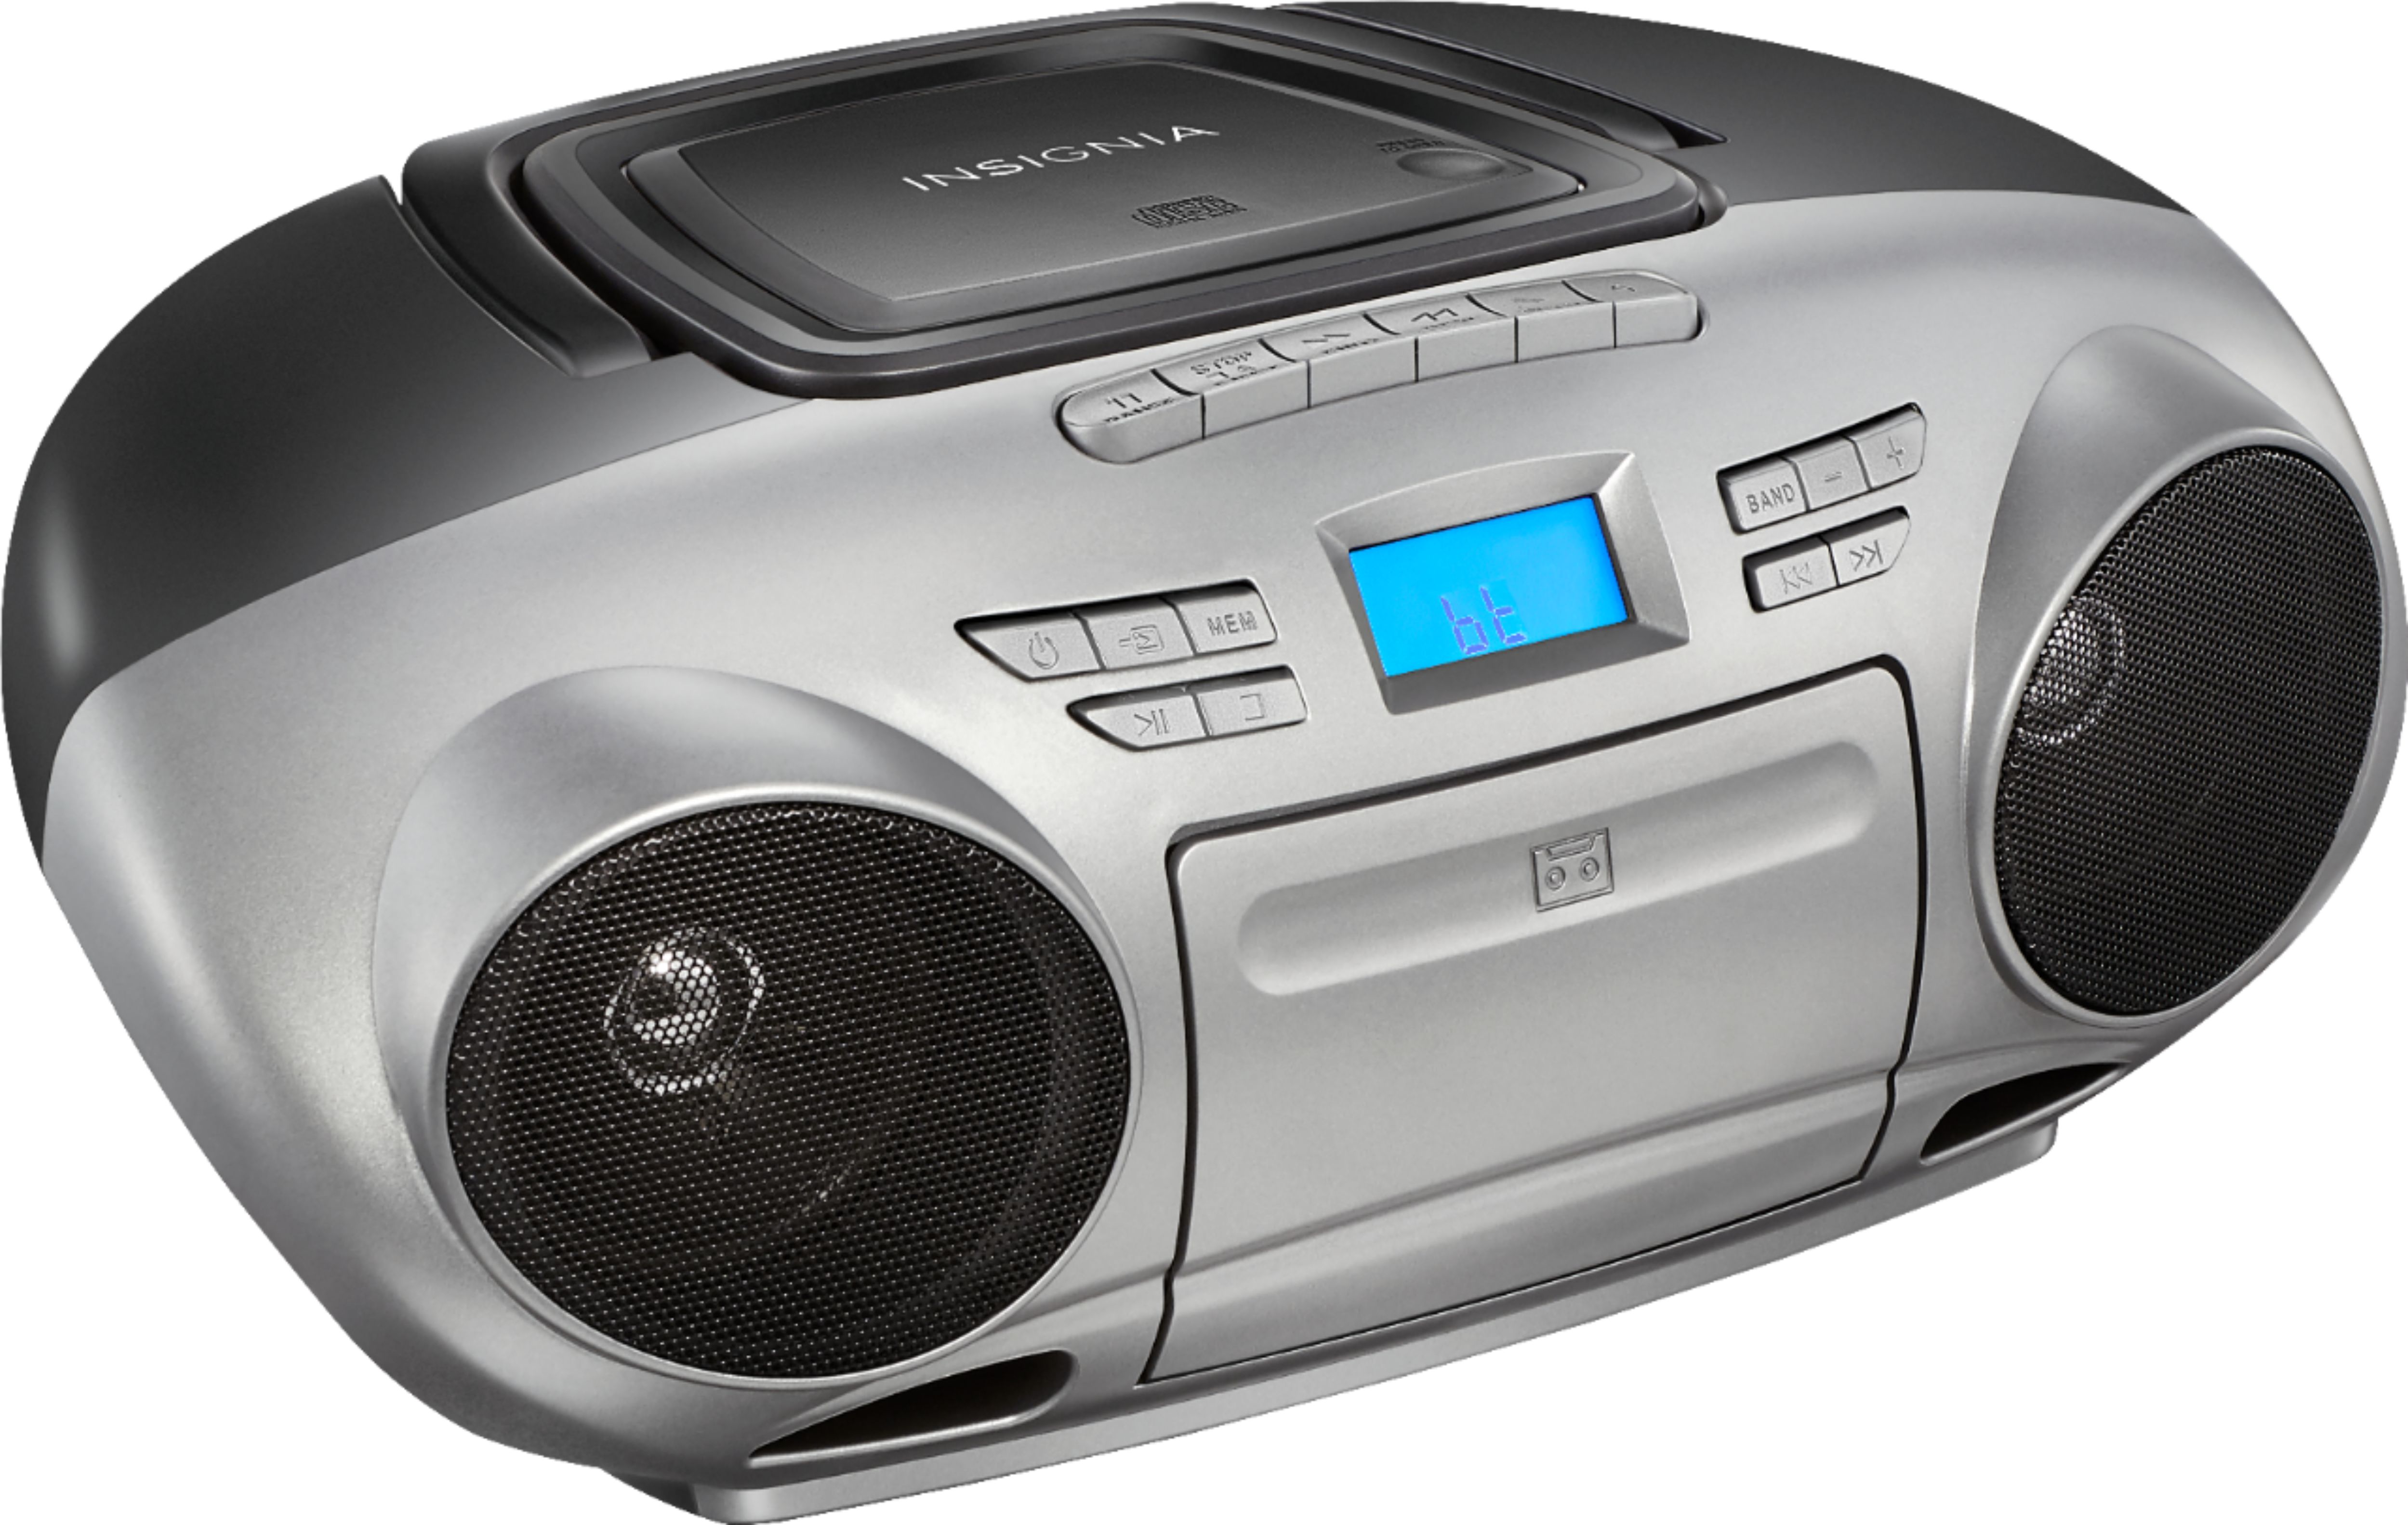 Angle View: ION Audio - Retro Boombox with AM/FM Radio - Silver